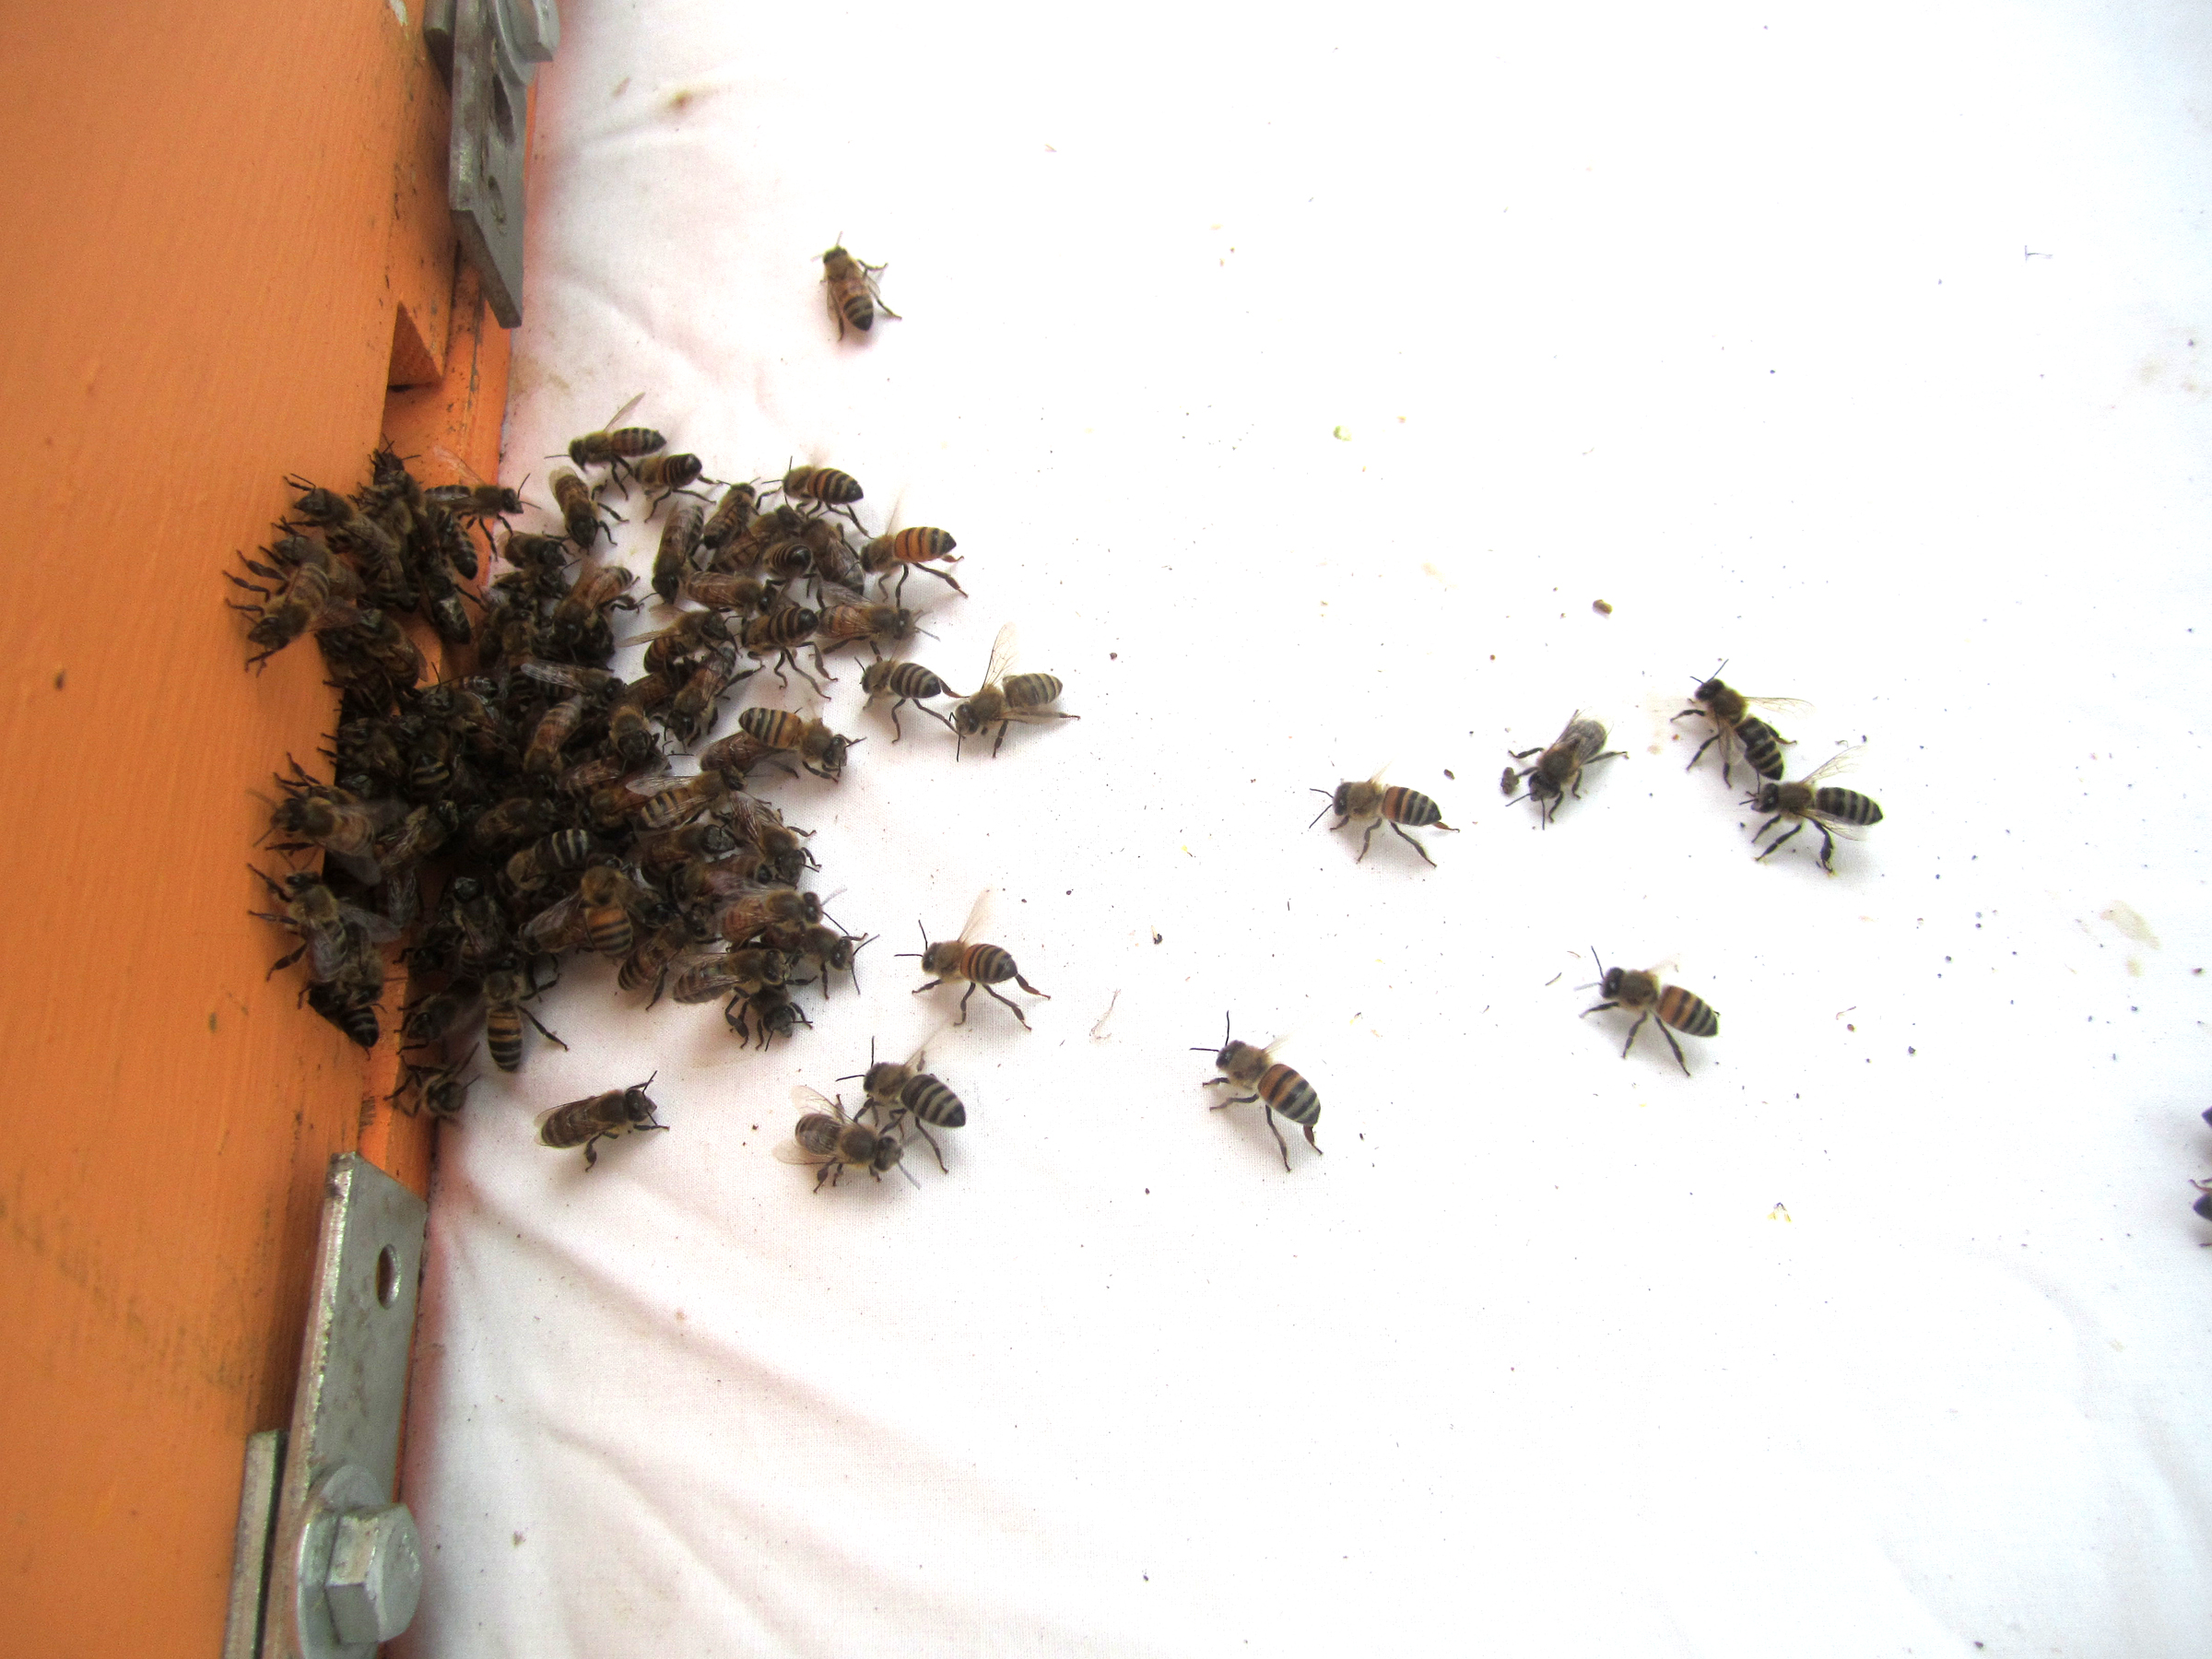 Swarm headed into hive